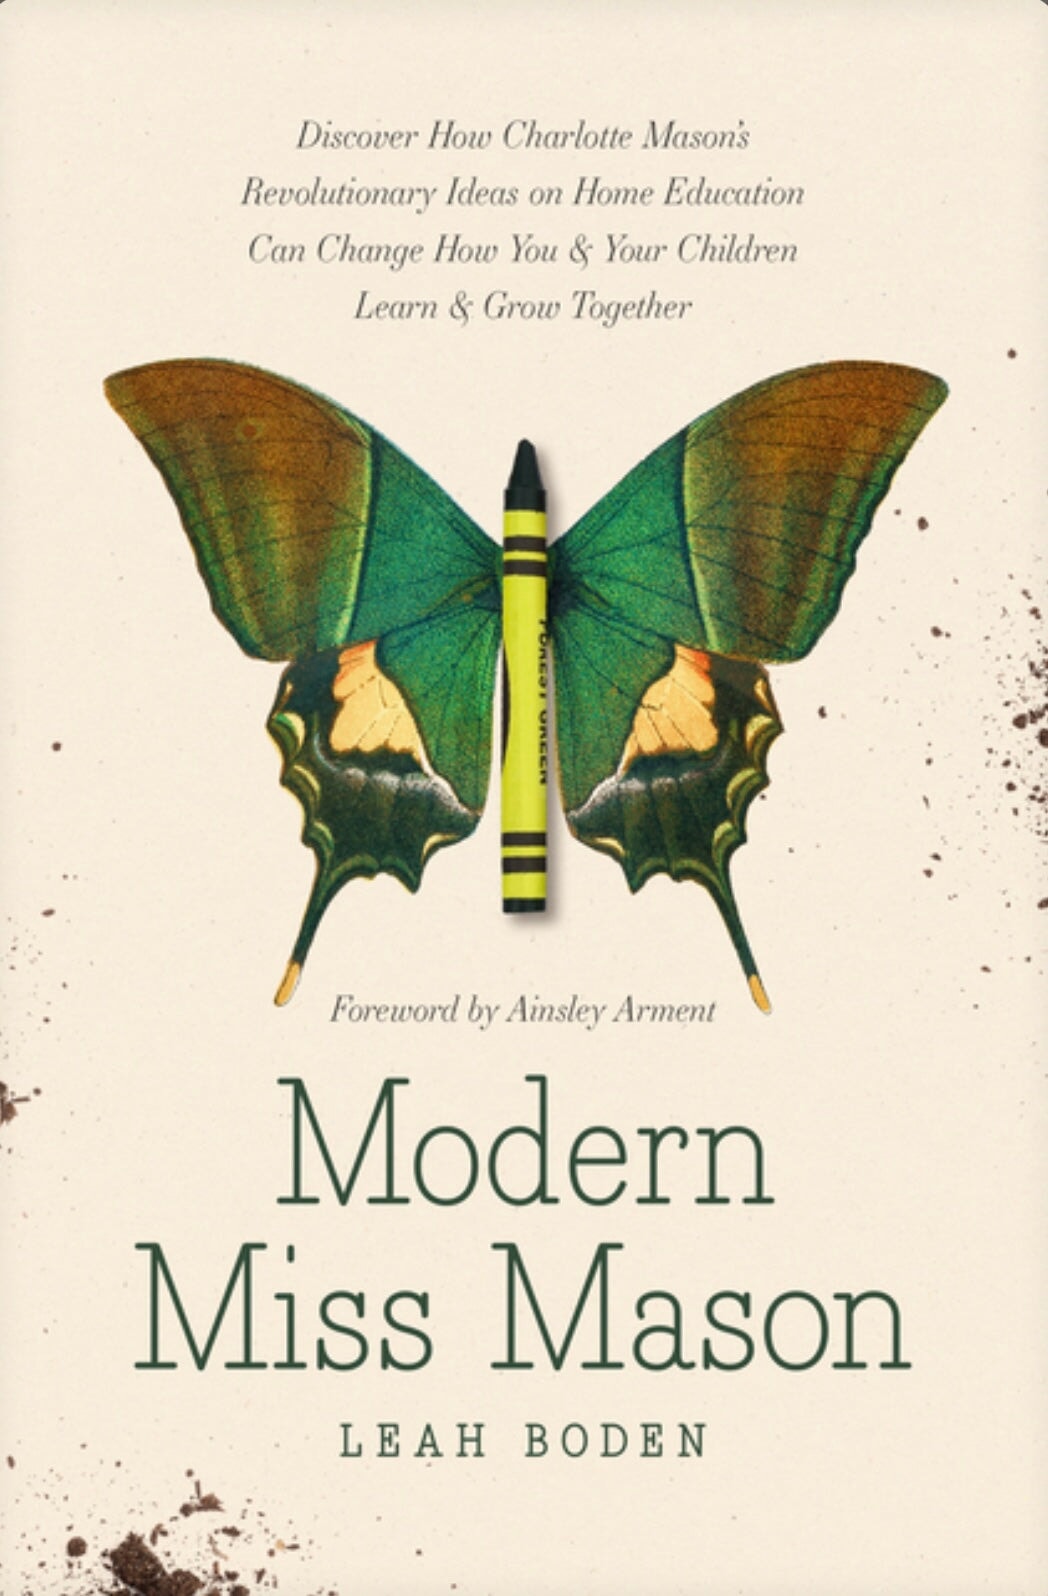 Modern Miss Mason by Leah Biden | Charlotte Mason